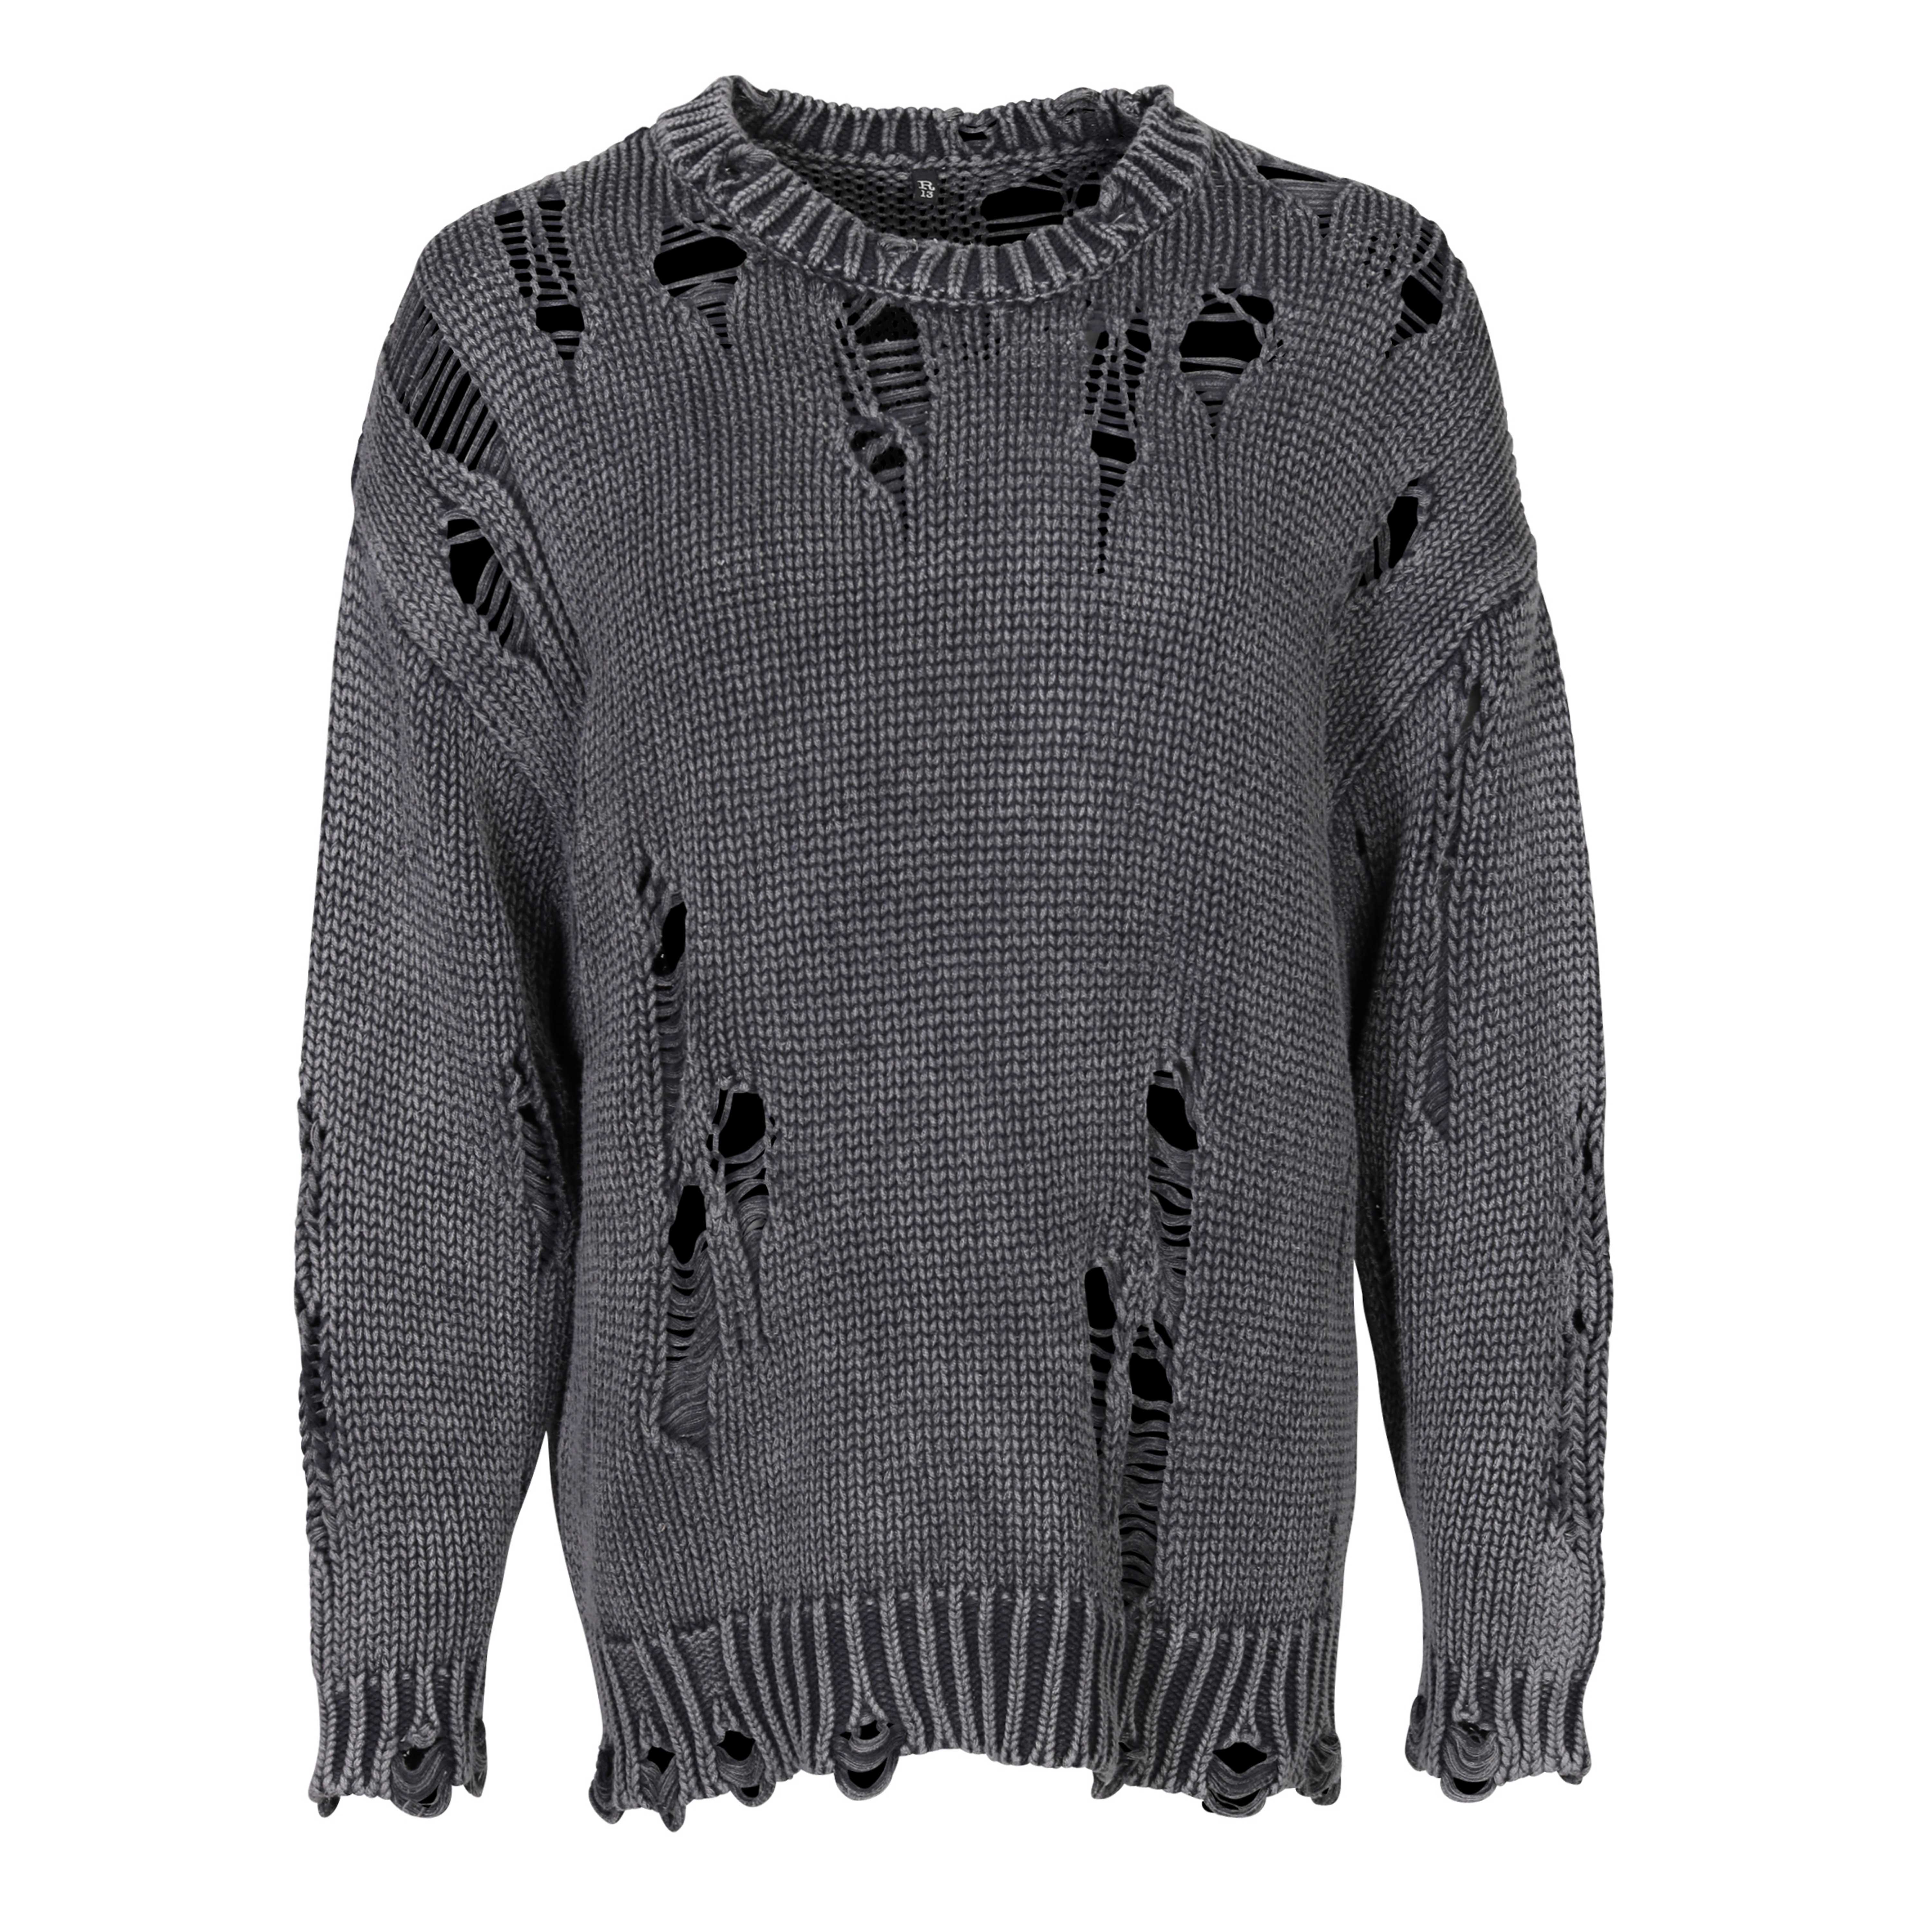 R13 Distressed Oversized Sweater in Acid Black L